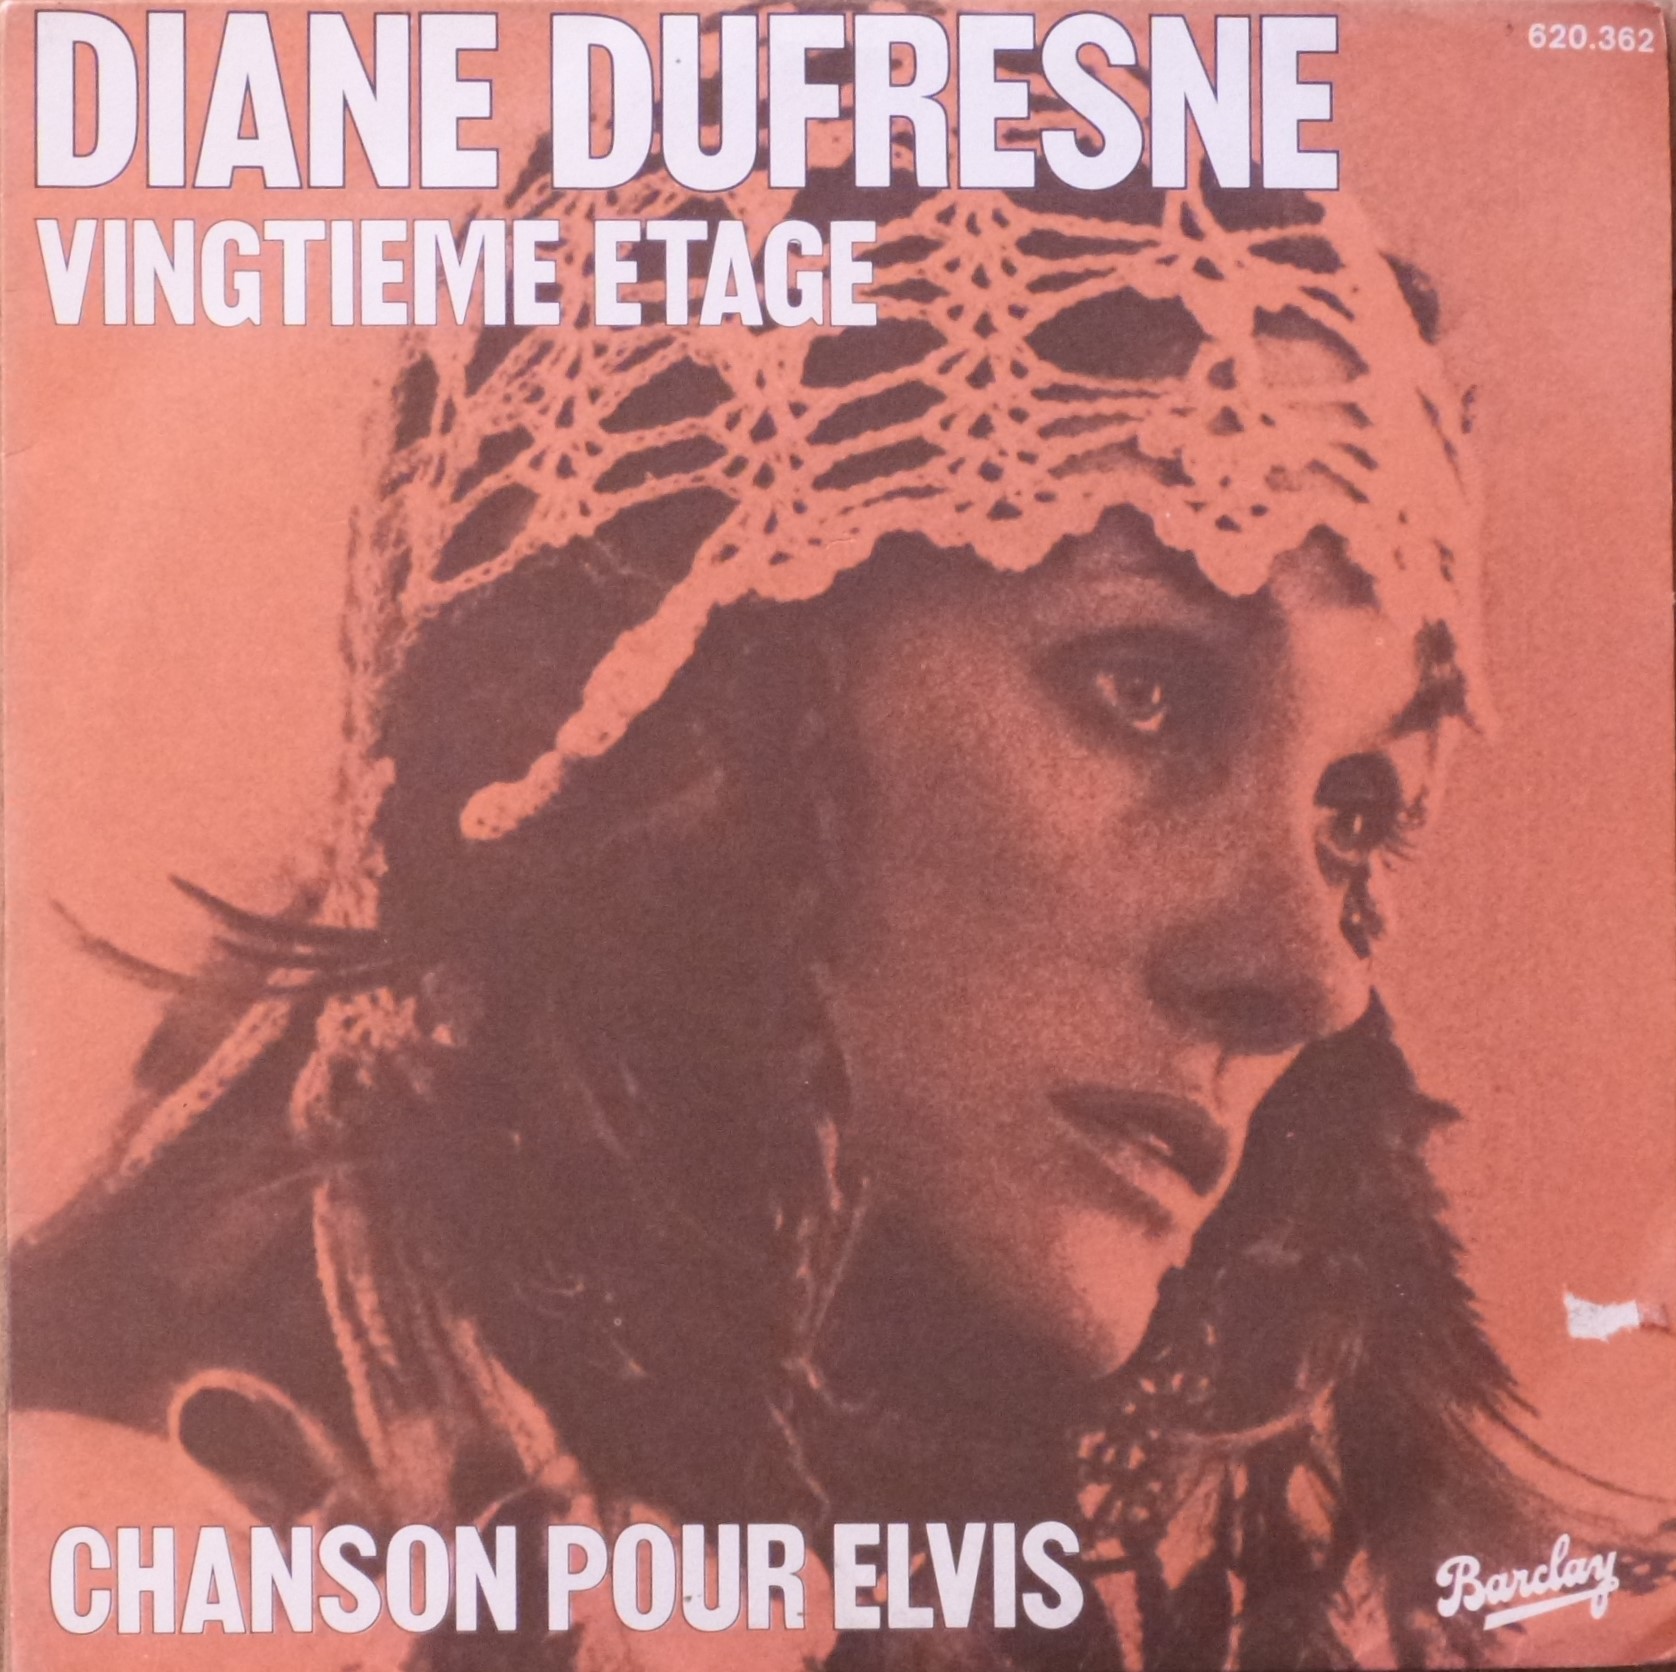 Diane Dufresne